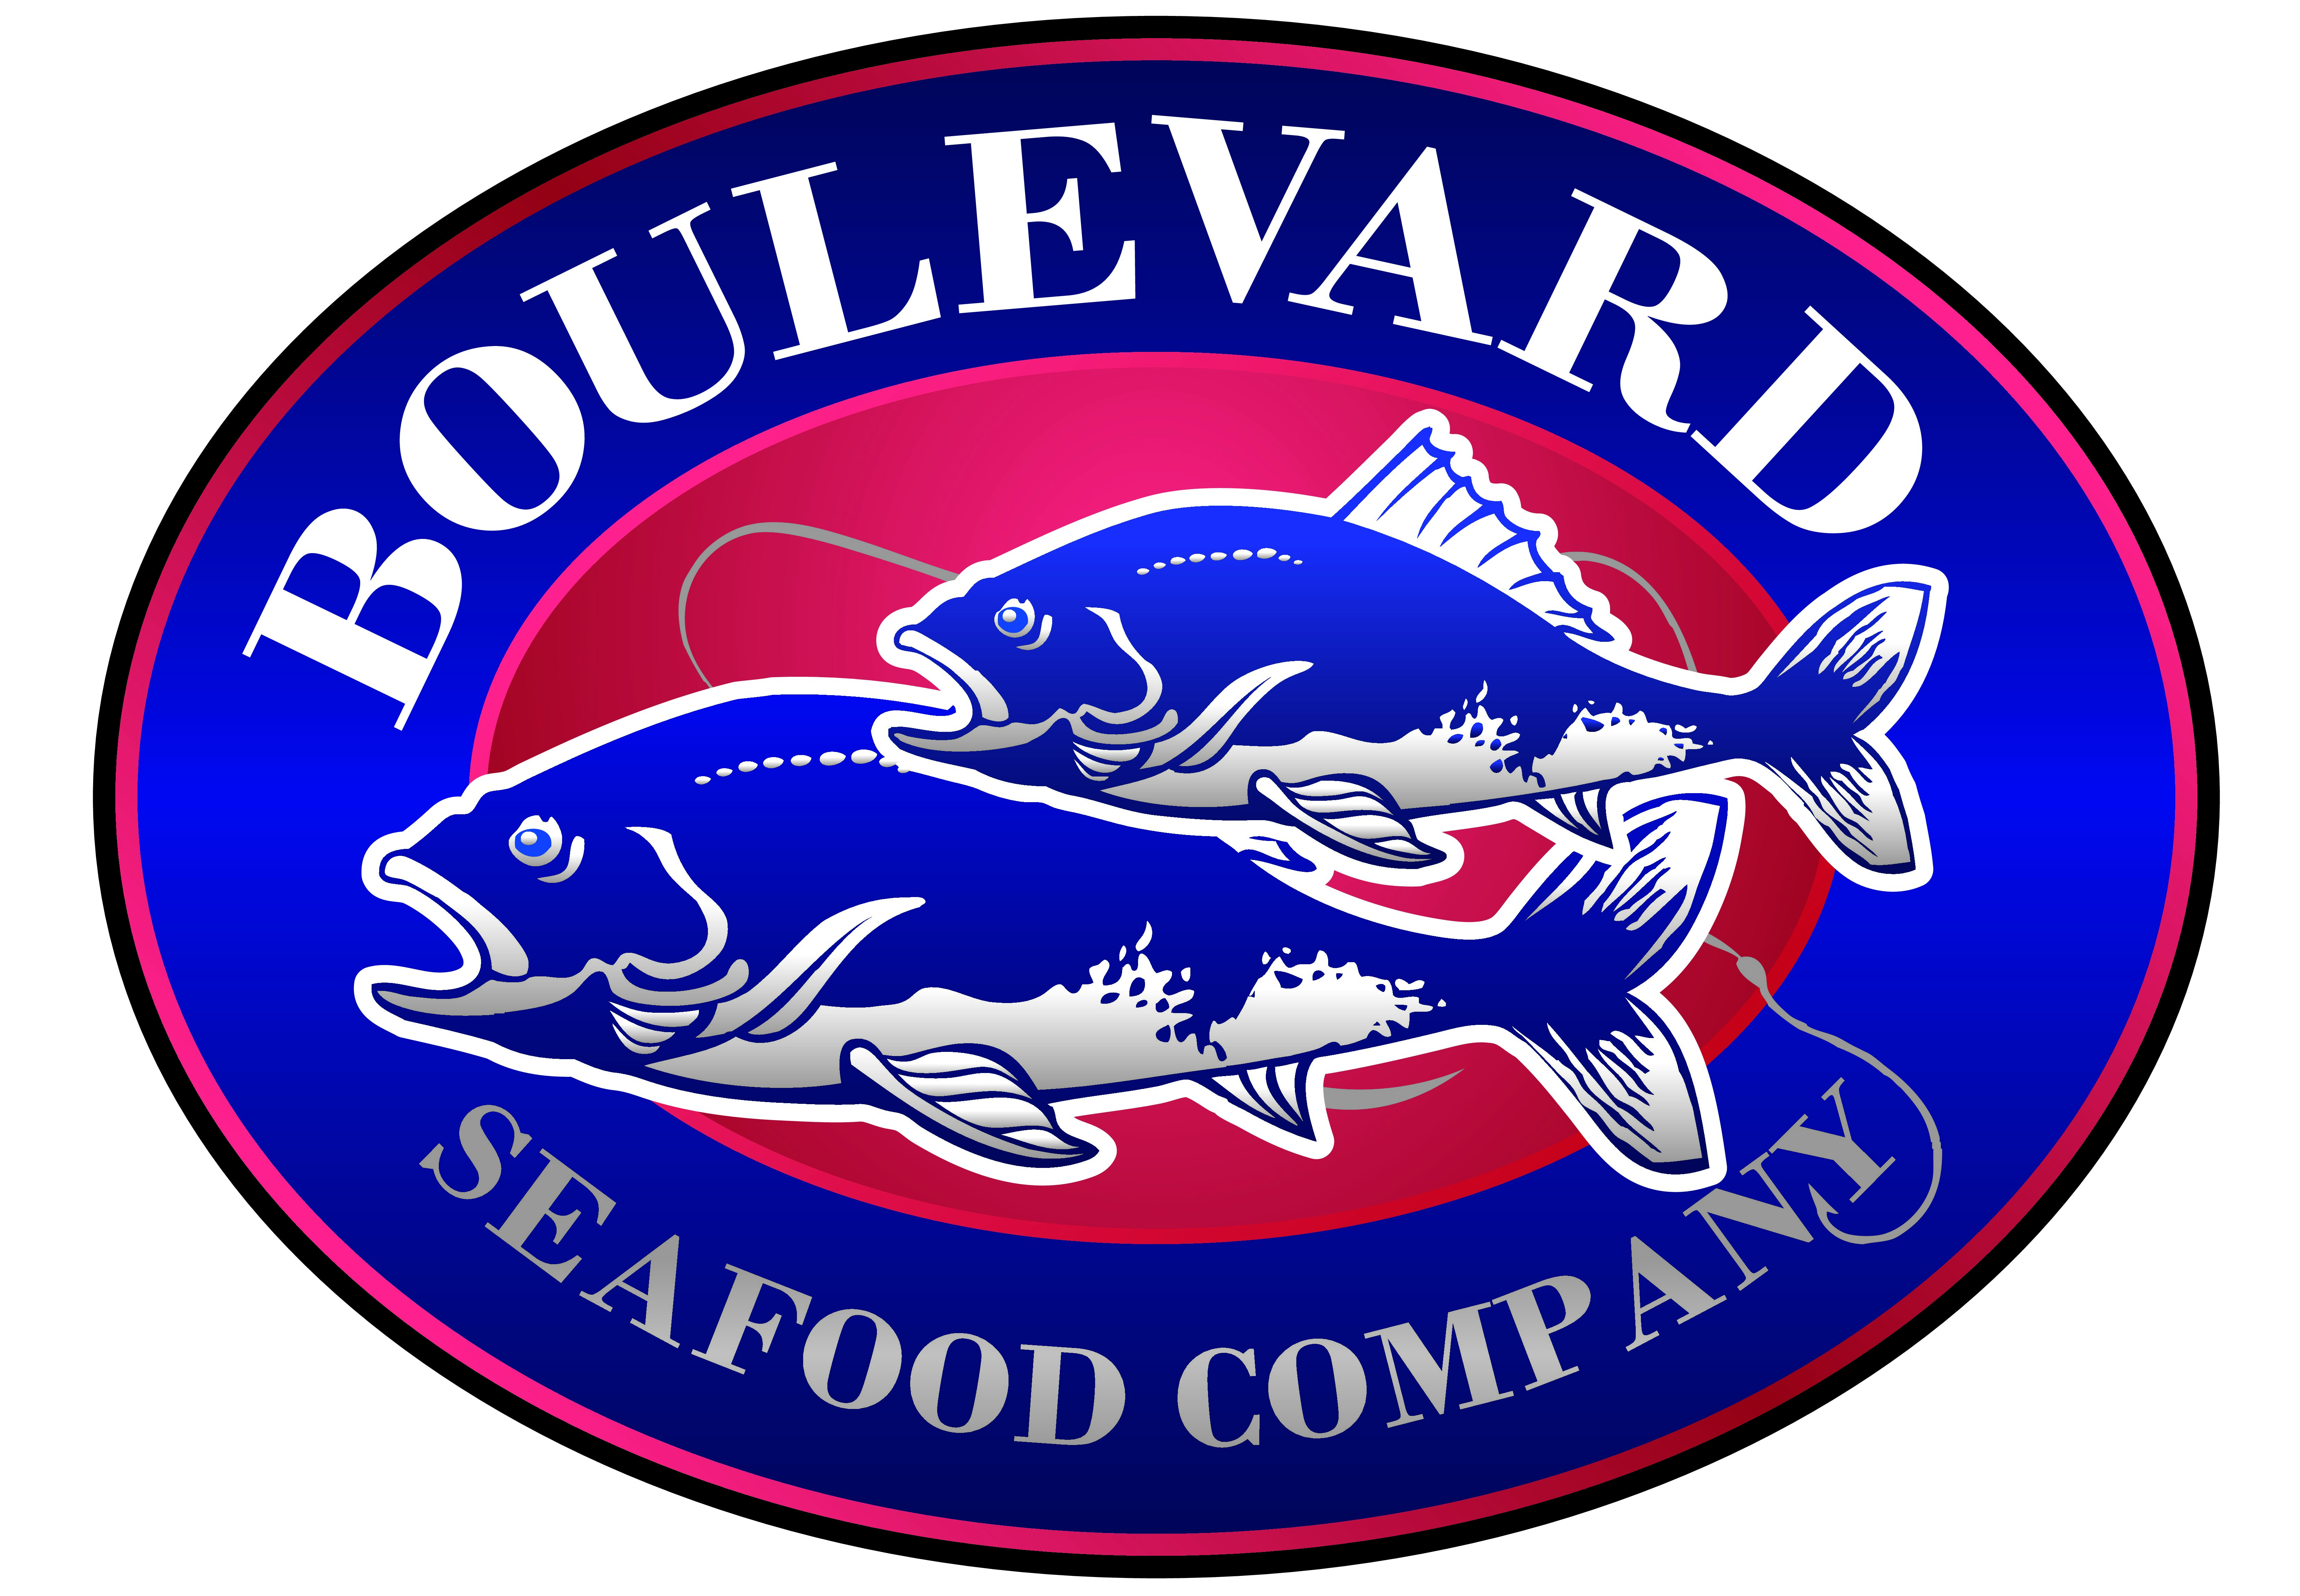 Boulevard Seafood Logo Libby Astorga pdf